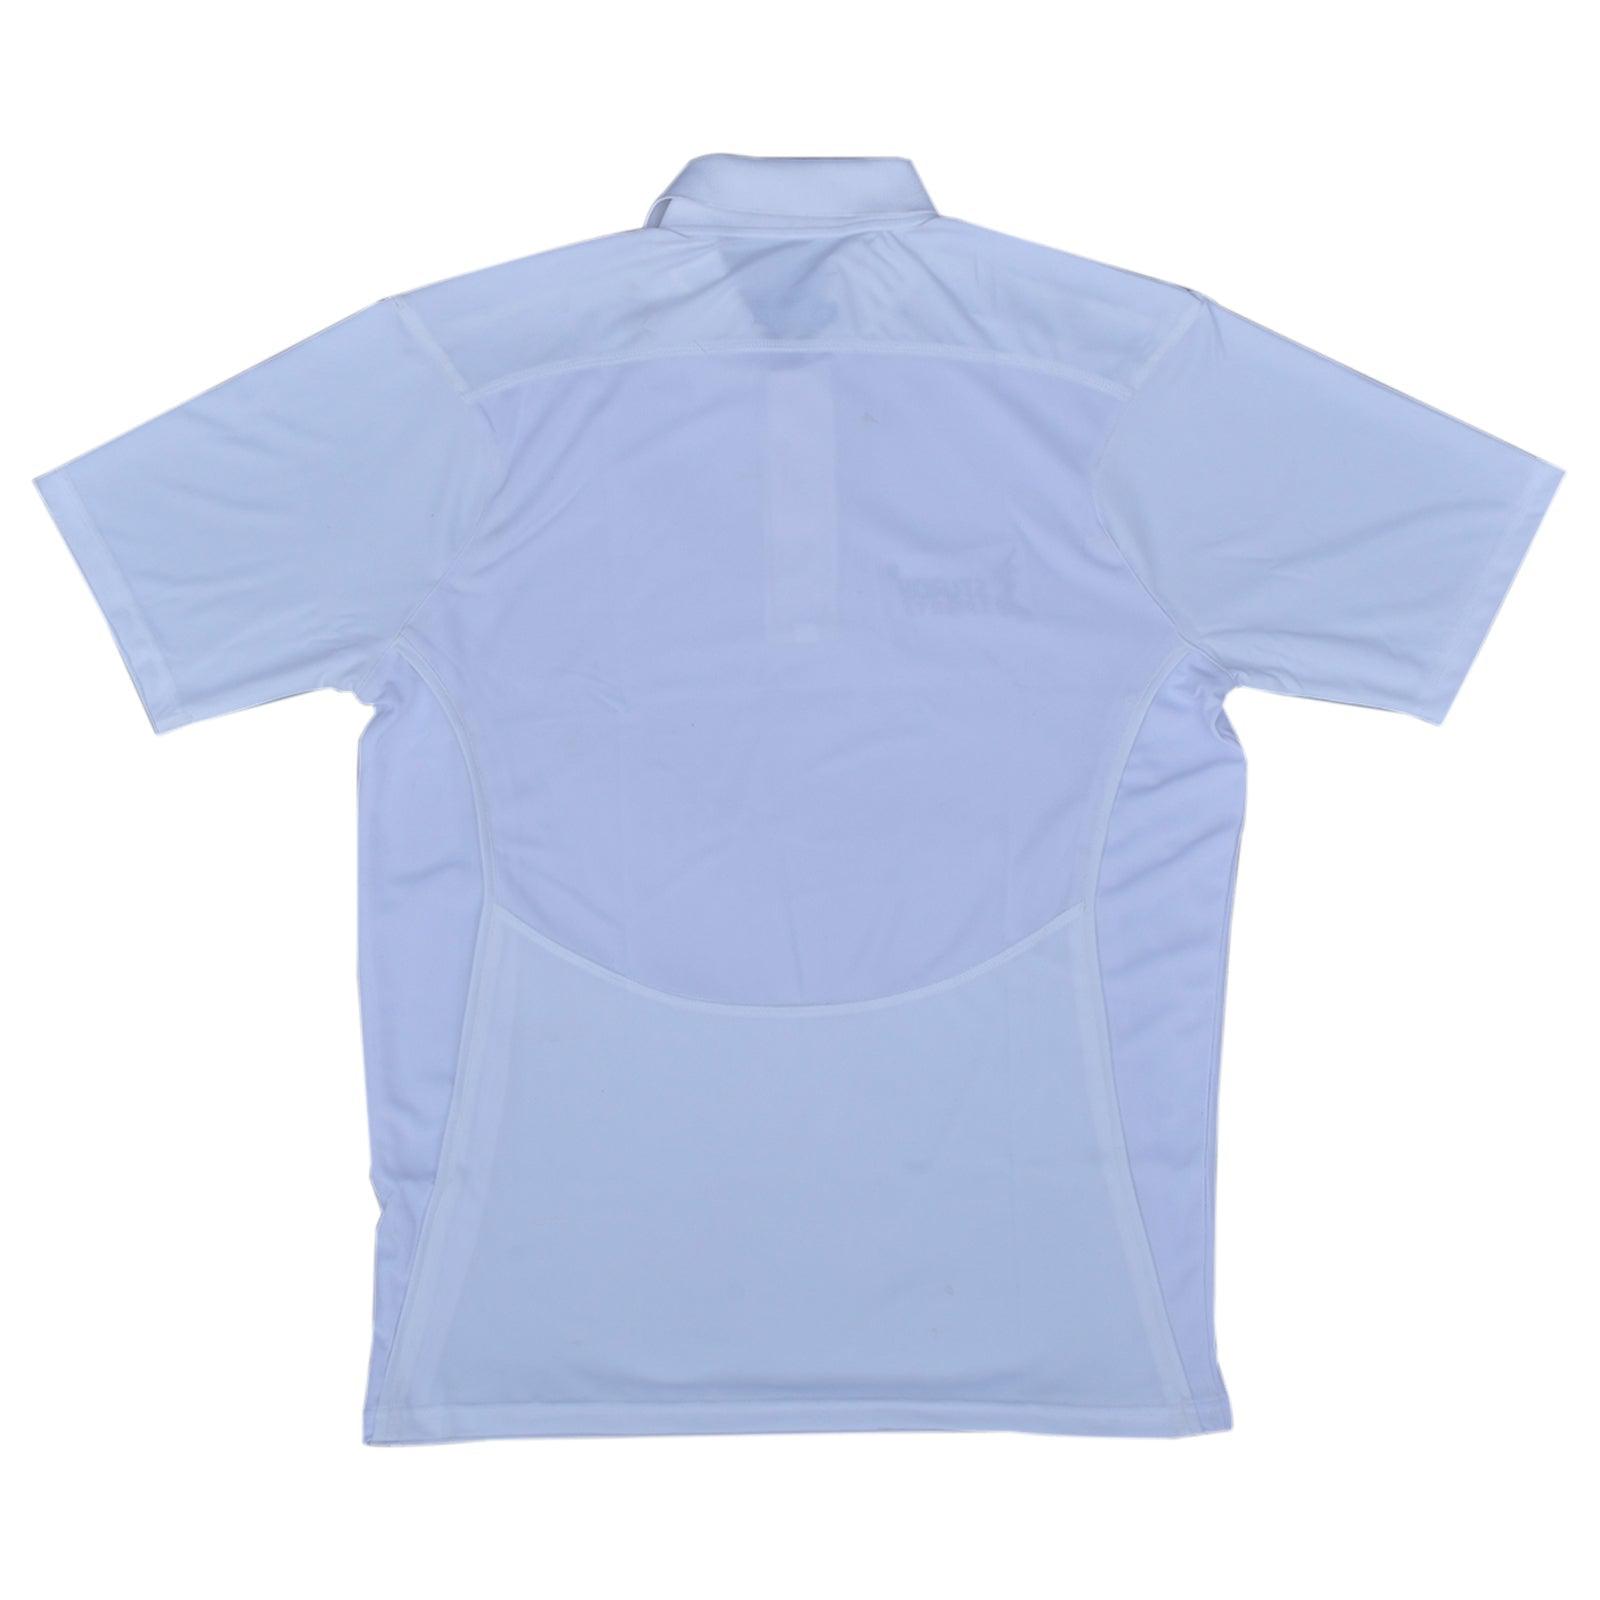 Sturdy Test Short Sleeve White Shirt - Senior